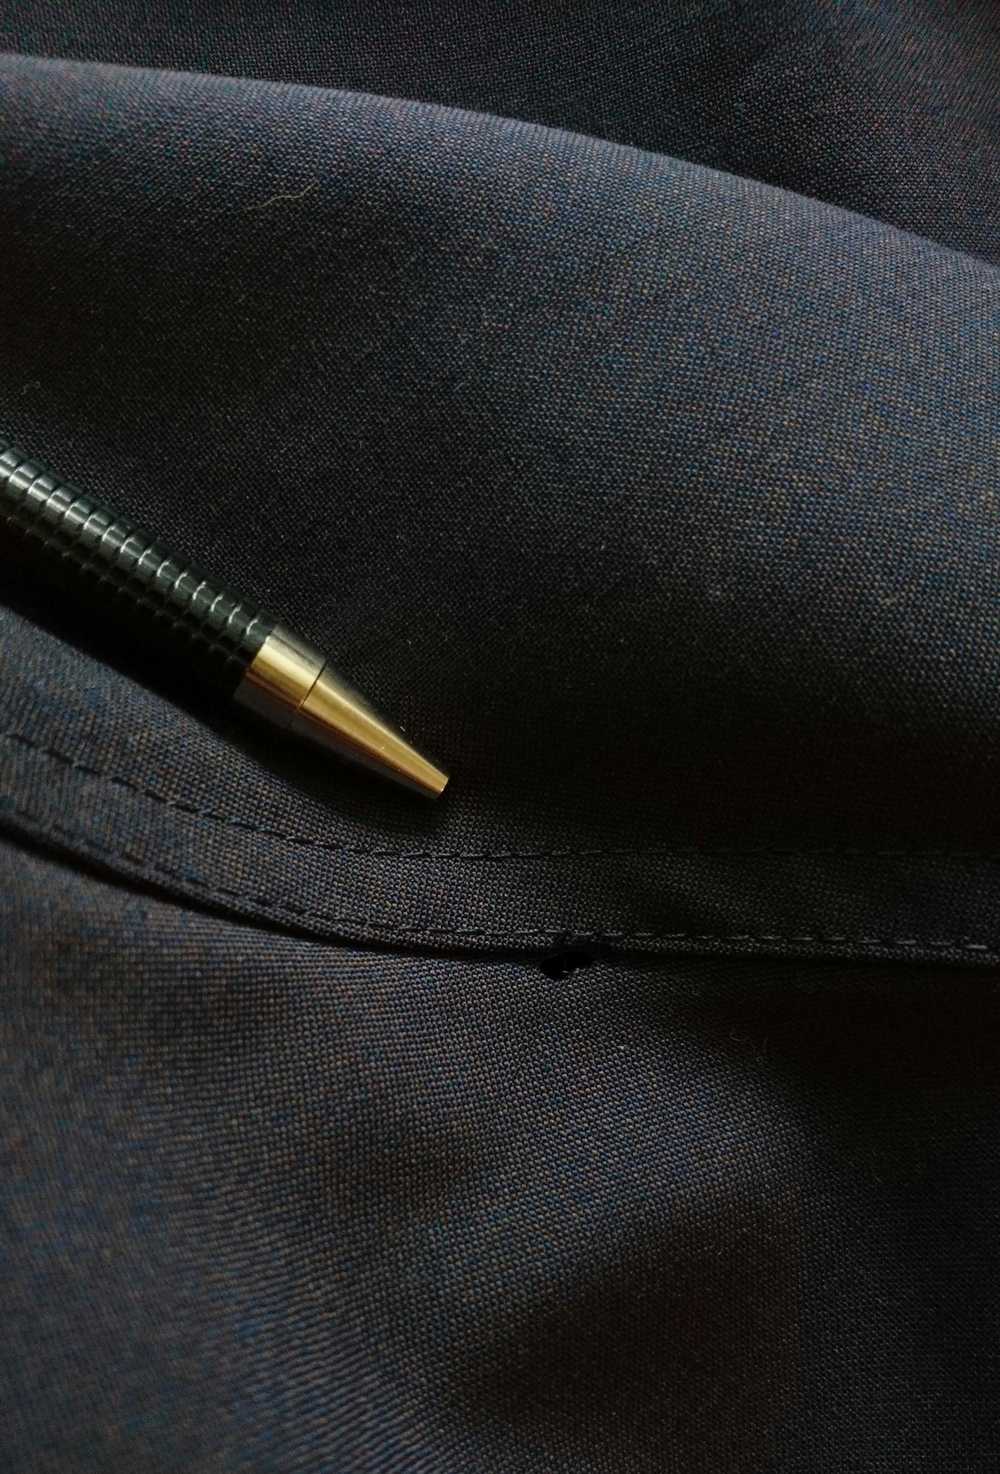 Julien David Cropped Trouser SS2013 - image 5